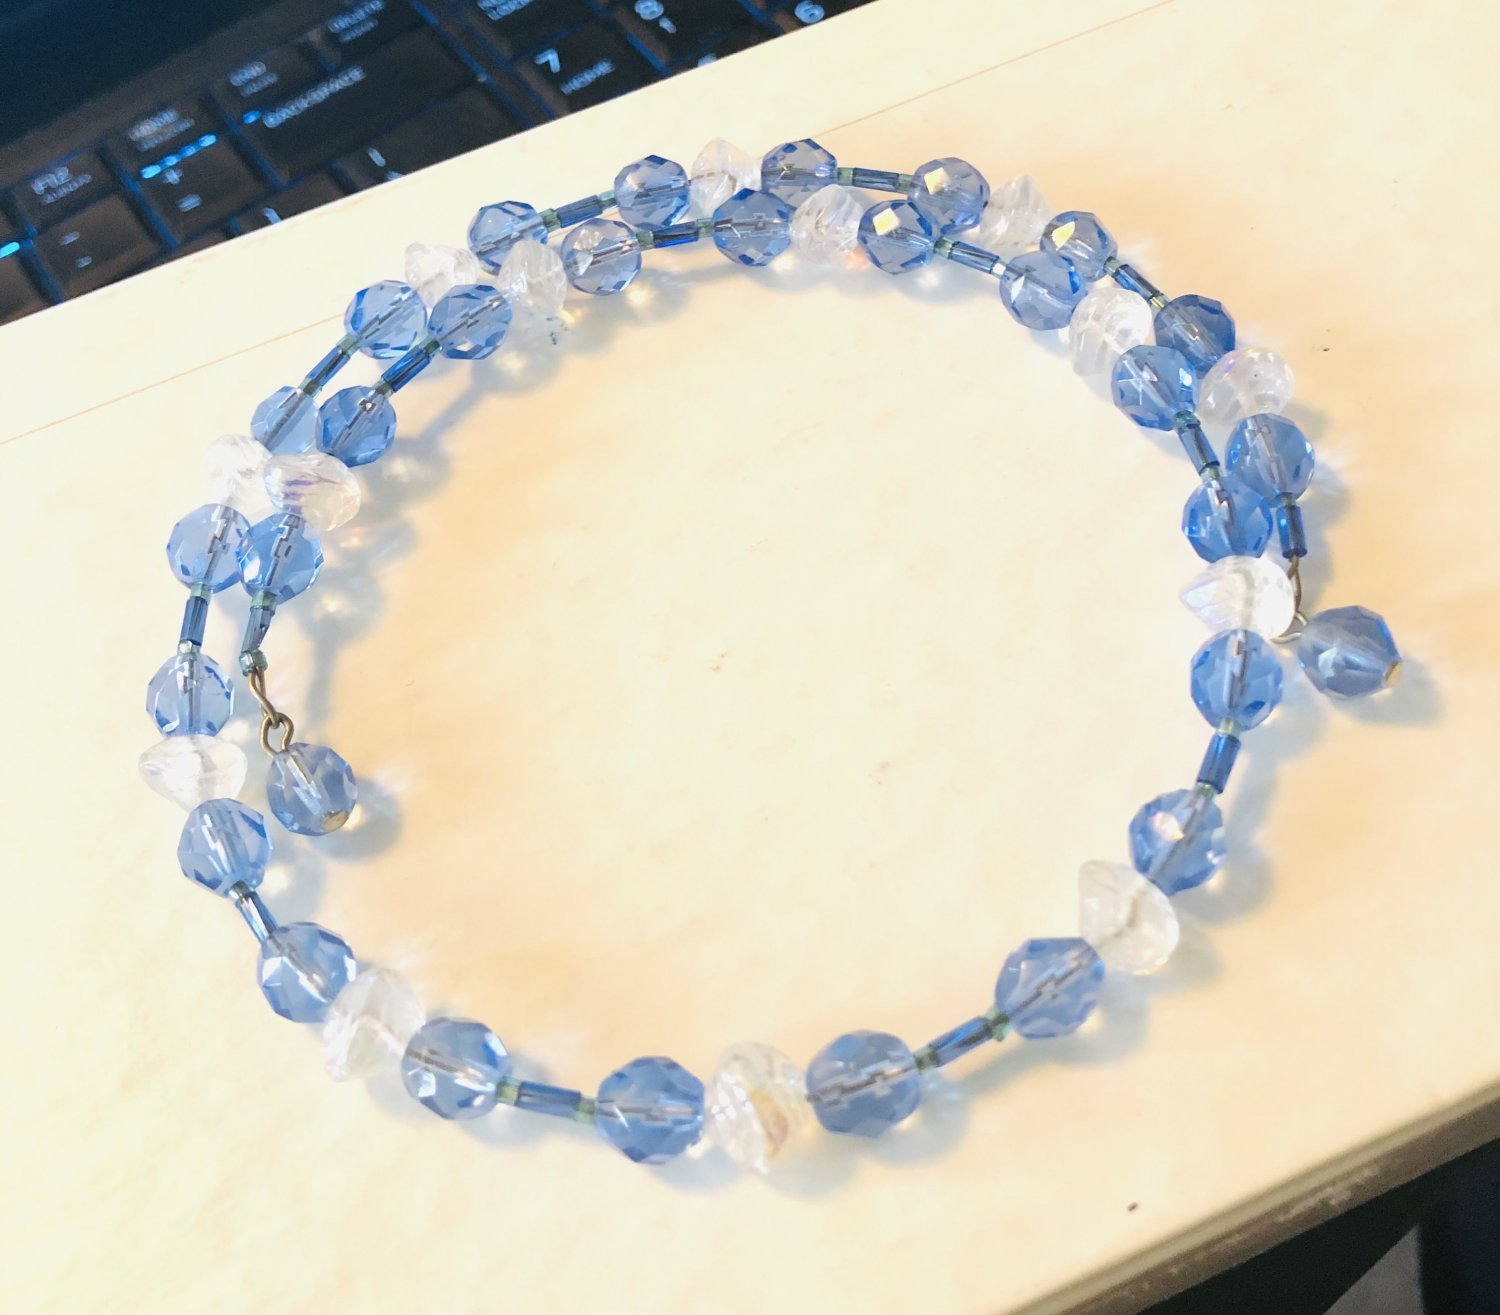 Blue and clear beaded choker, 4010N, boho claspless jewelry gift ideas